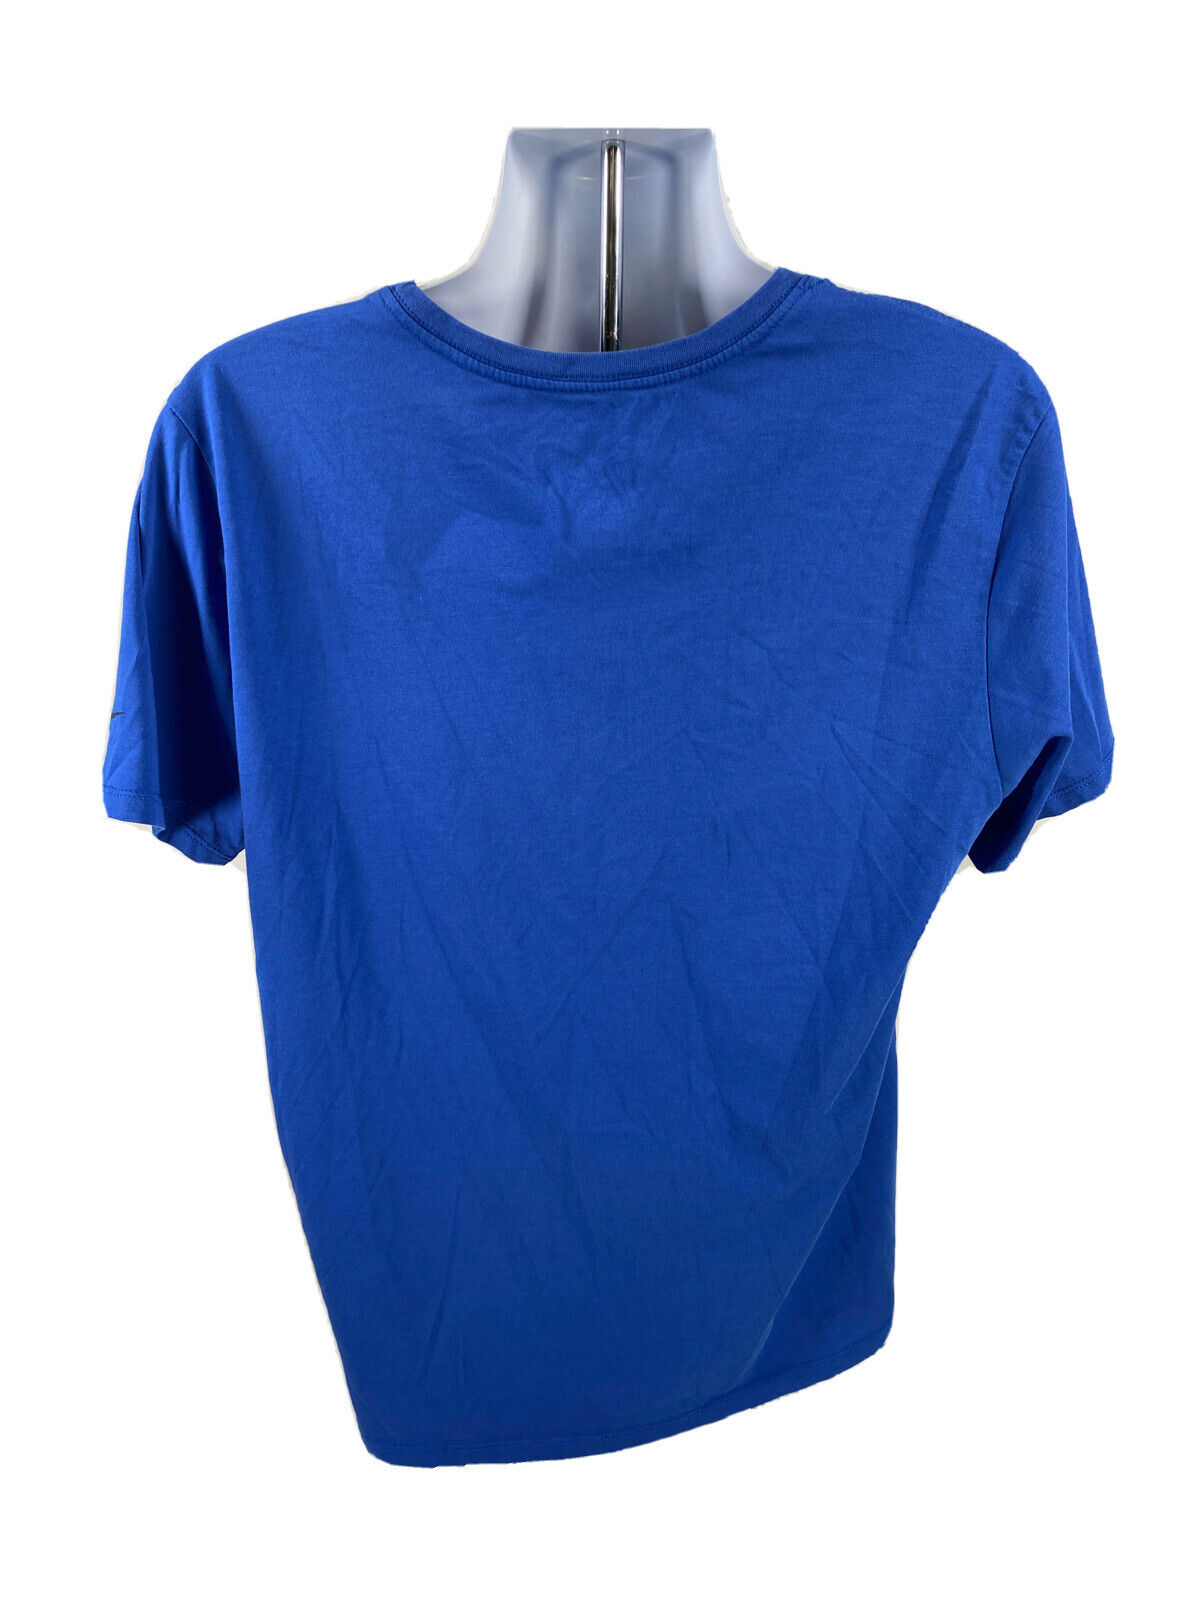 Nike Men's Blue Short Sleeve Graphic Dri-Fit Cotton Blend T-Shirt - XL